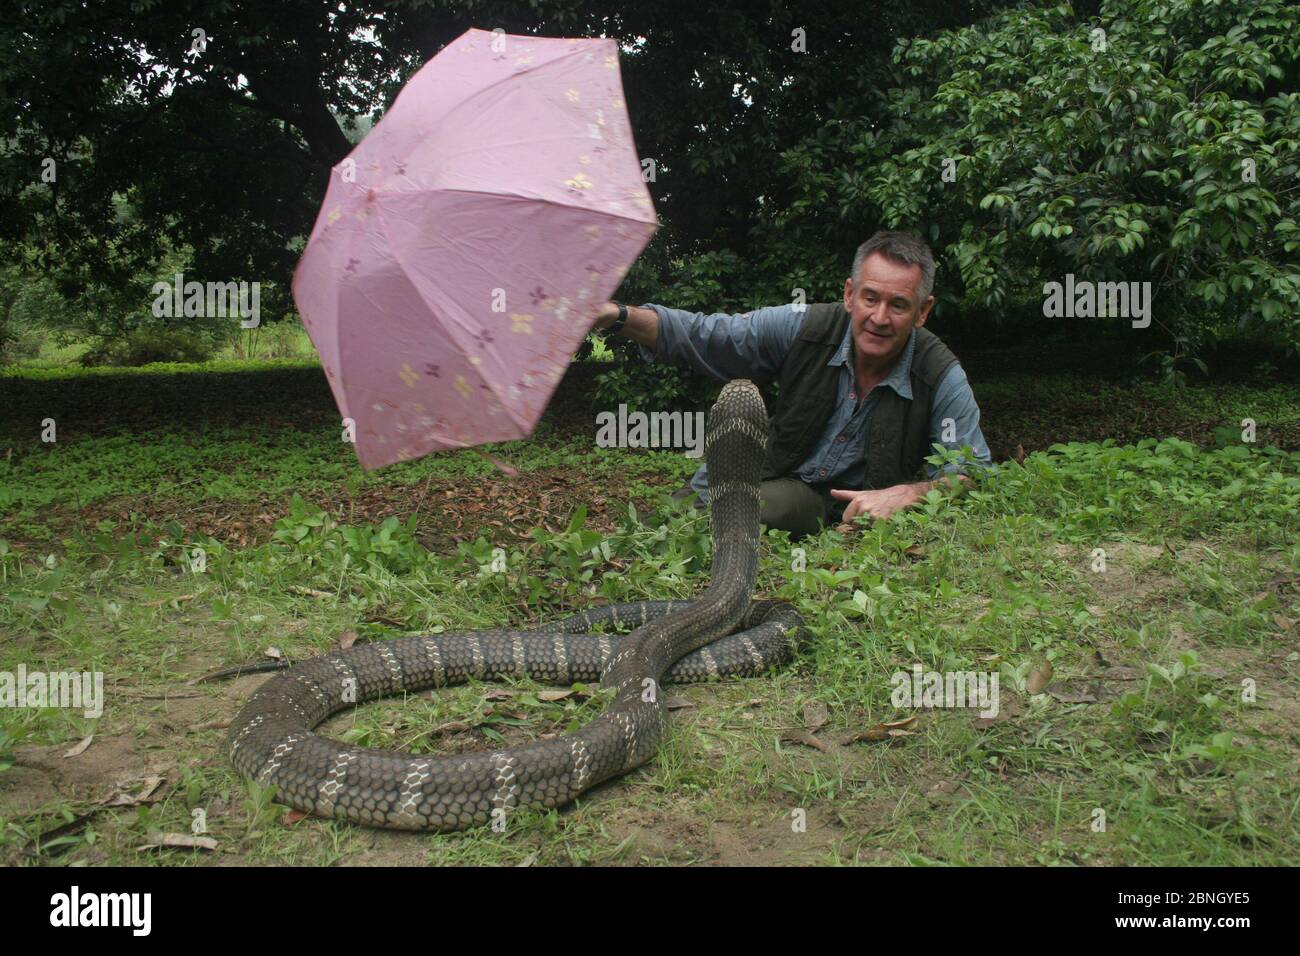 Presenter Nigel Marven distracting  King cobra (Ophiophagus hannah) with pink umbrella, China, May 2013. Stock Photo